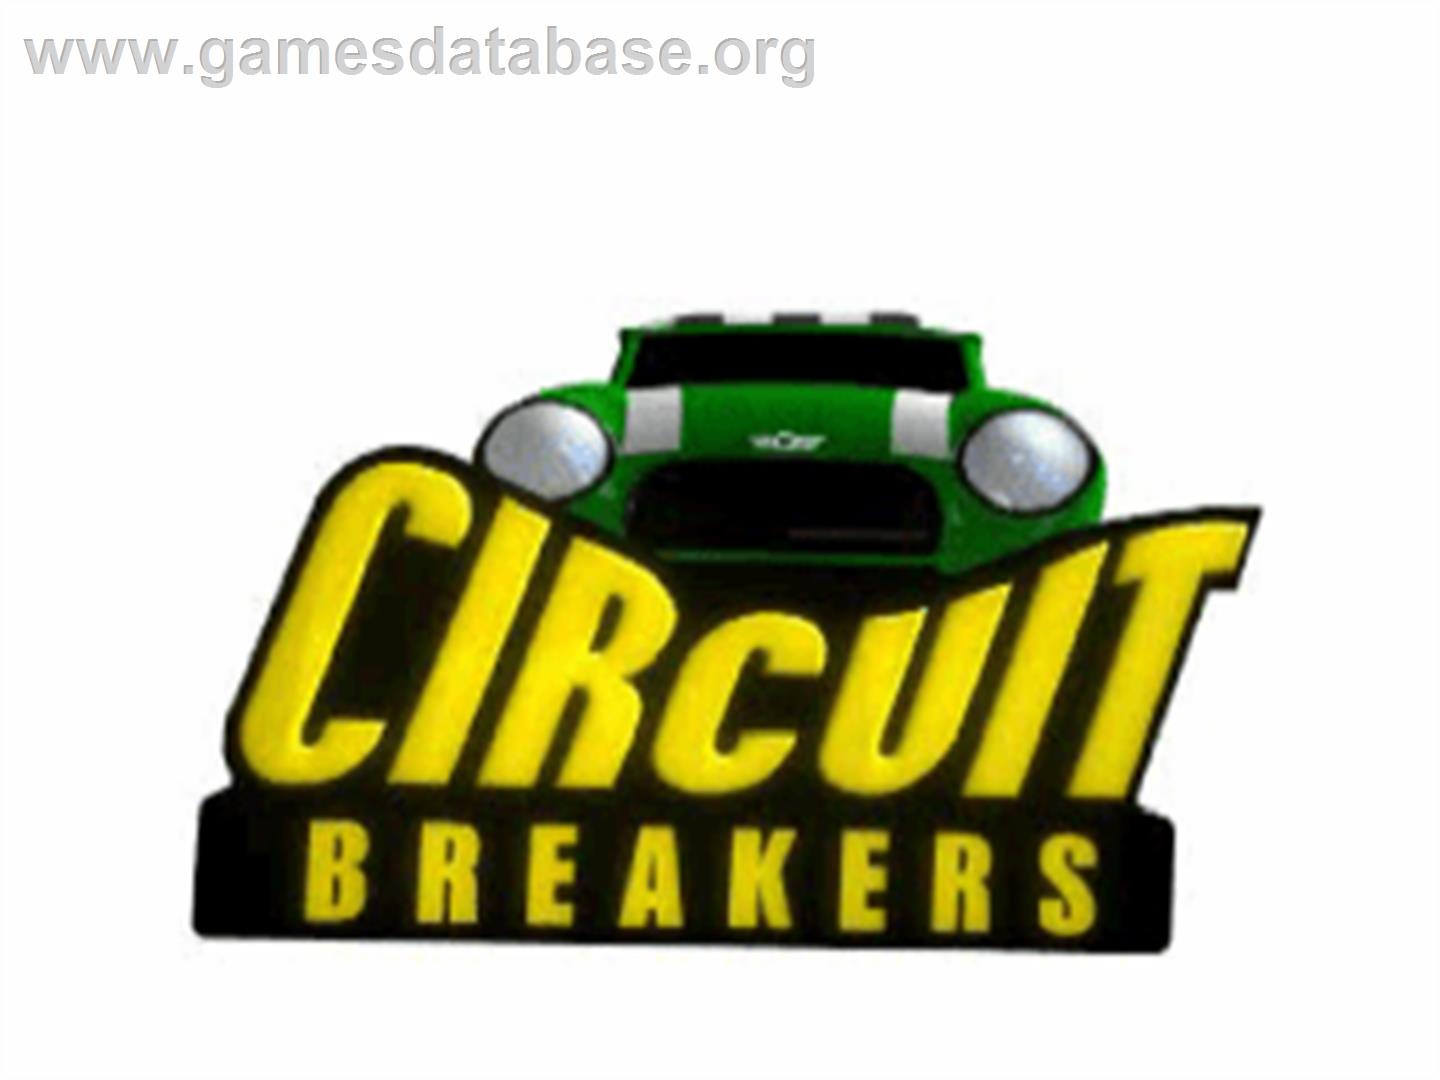 Circuit Breakers - Sony Playstation - Artwork - Title Screen